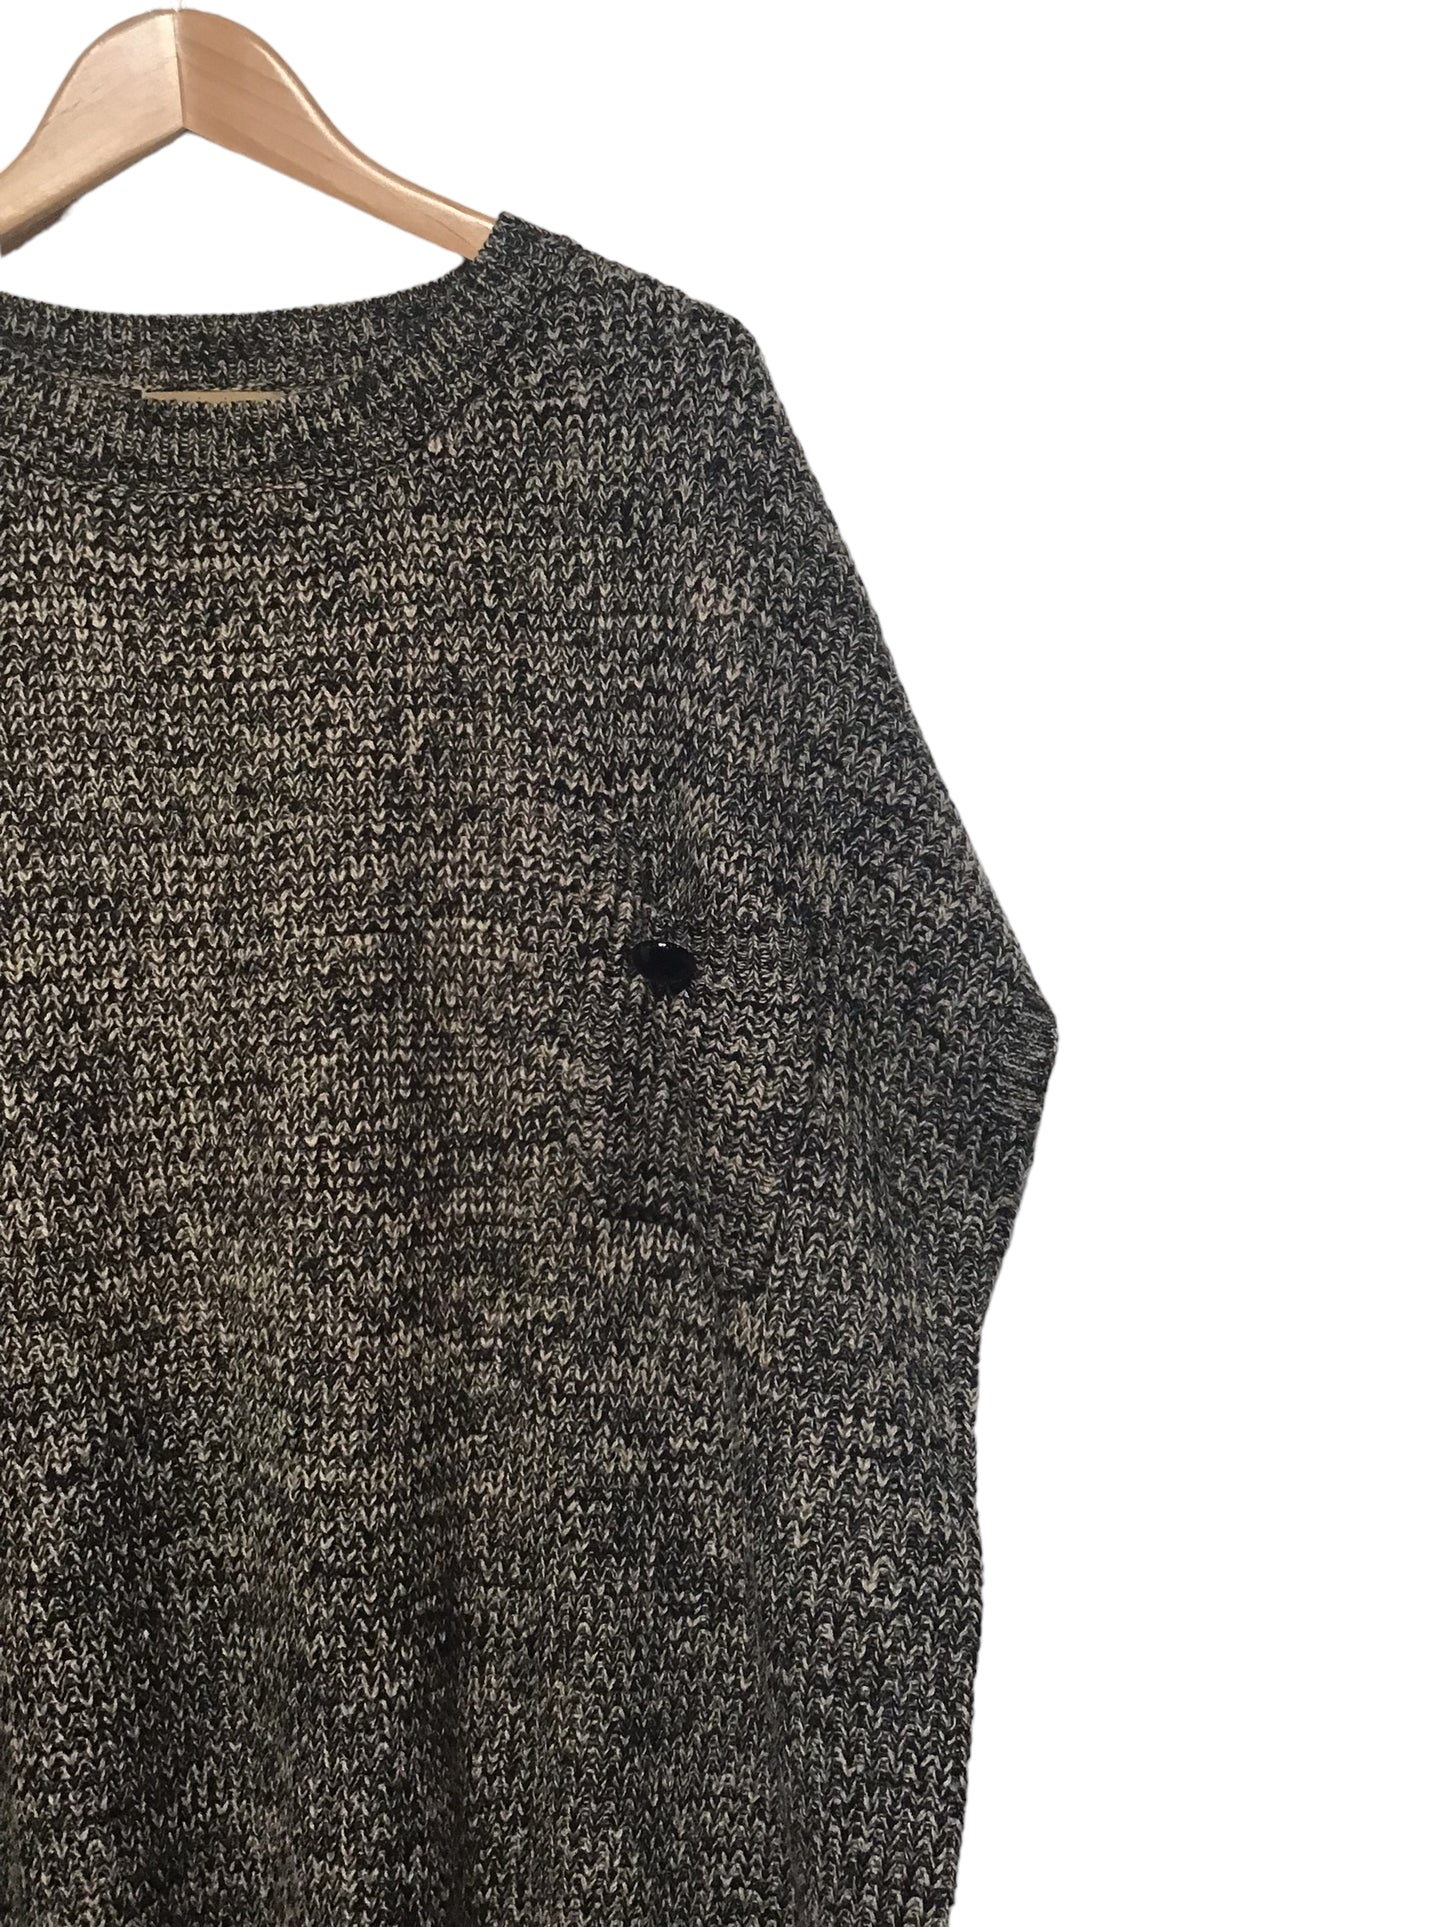 Katsuitil Knitted Sleeveless Long Sweater Dress (Size 3XL)